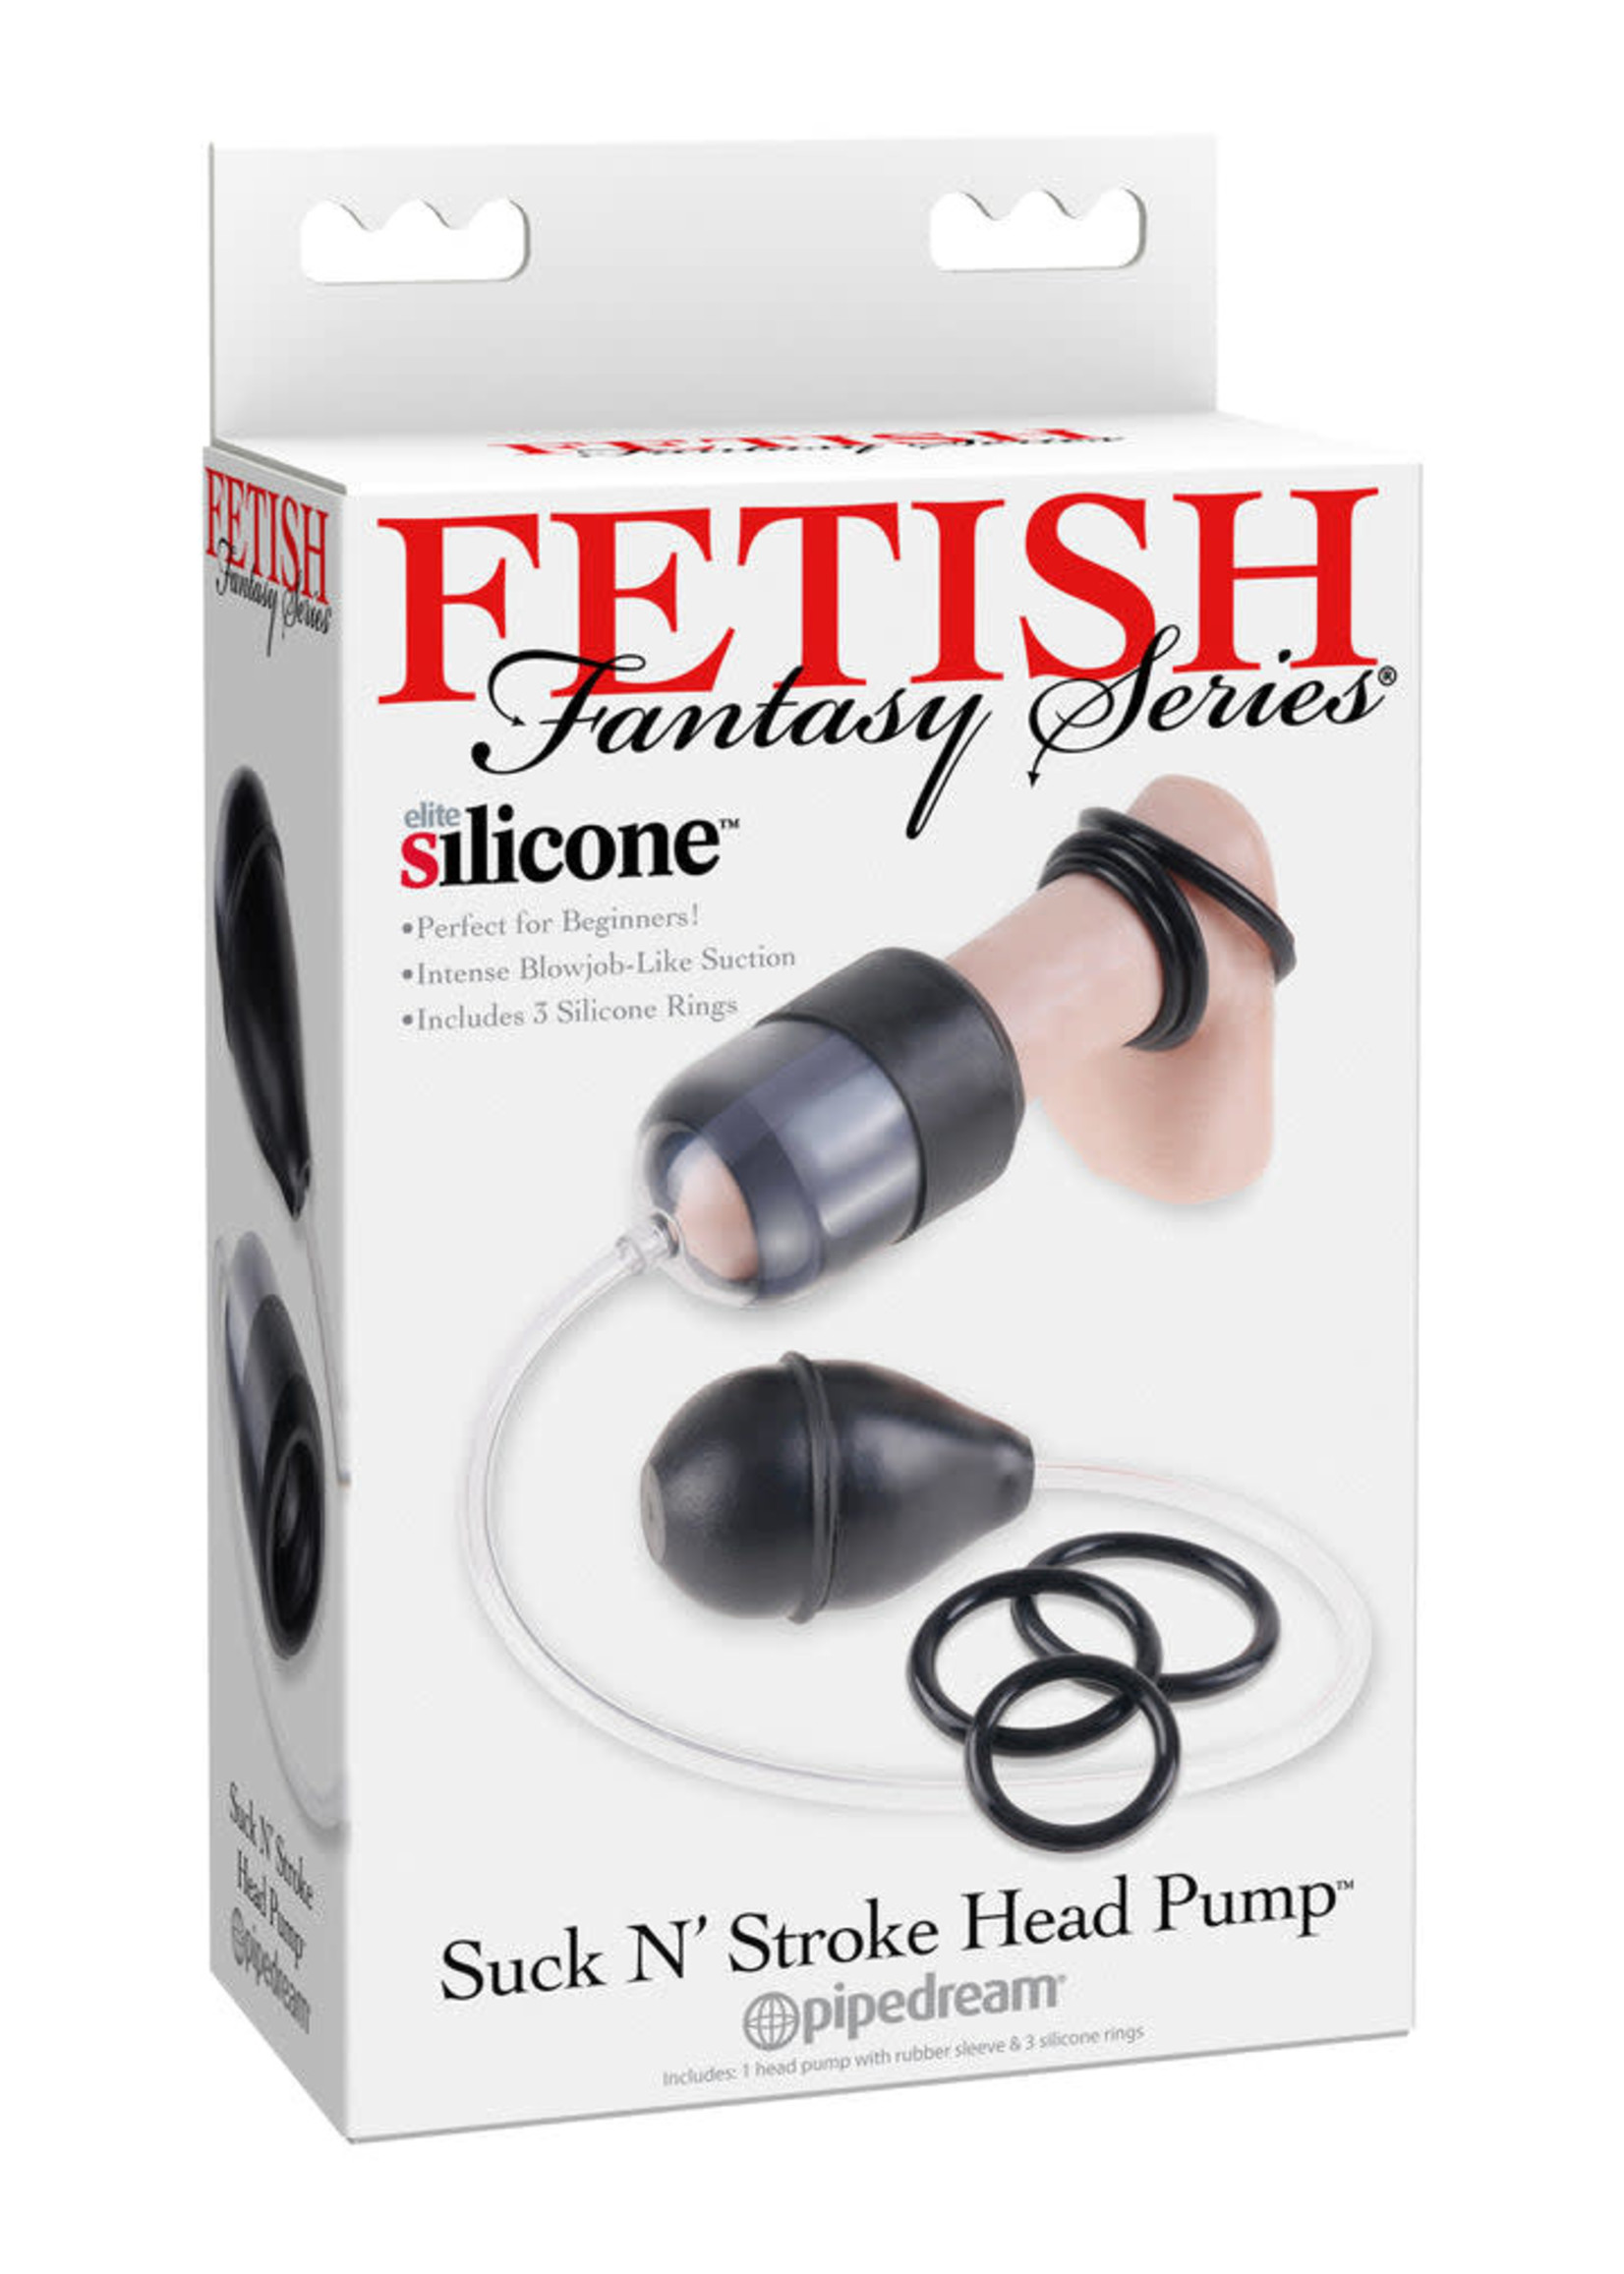 Pipedream Products, Inc. Fetish Fantasy Series Suck N’ Stroke Head Pump